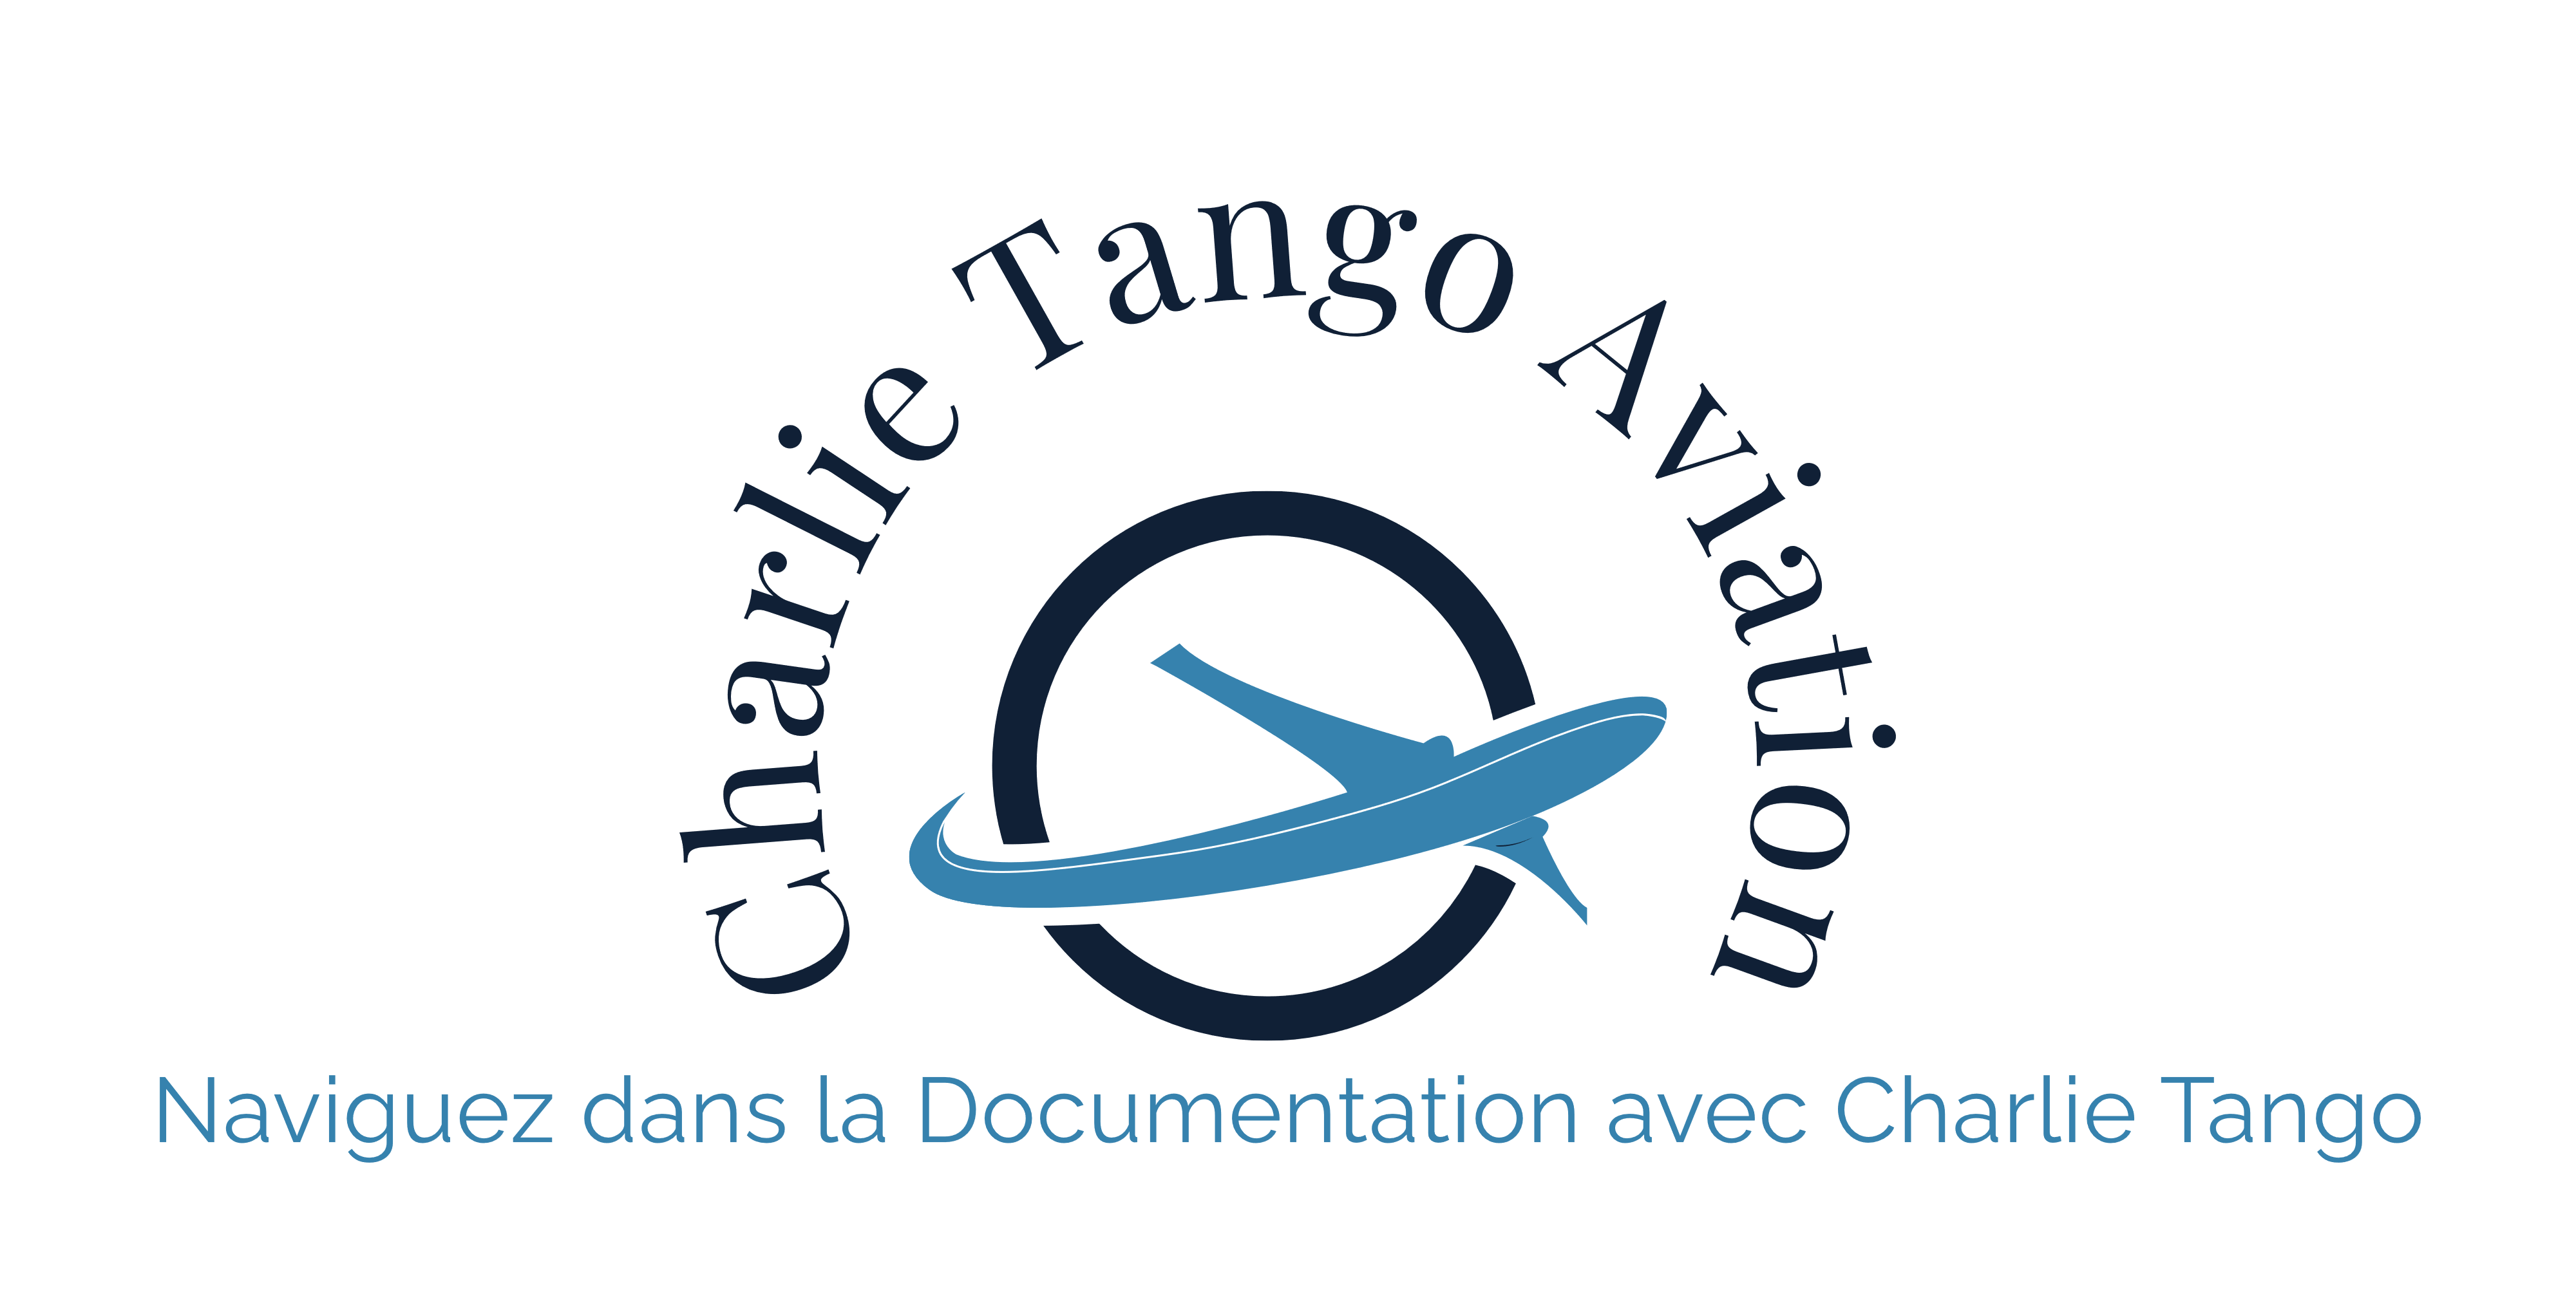 Charlie-Tango Aviation